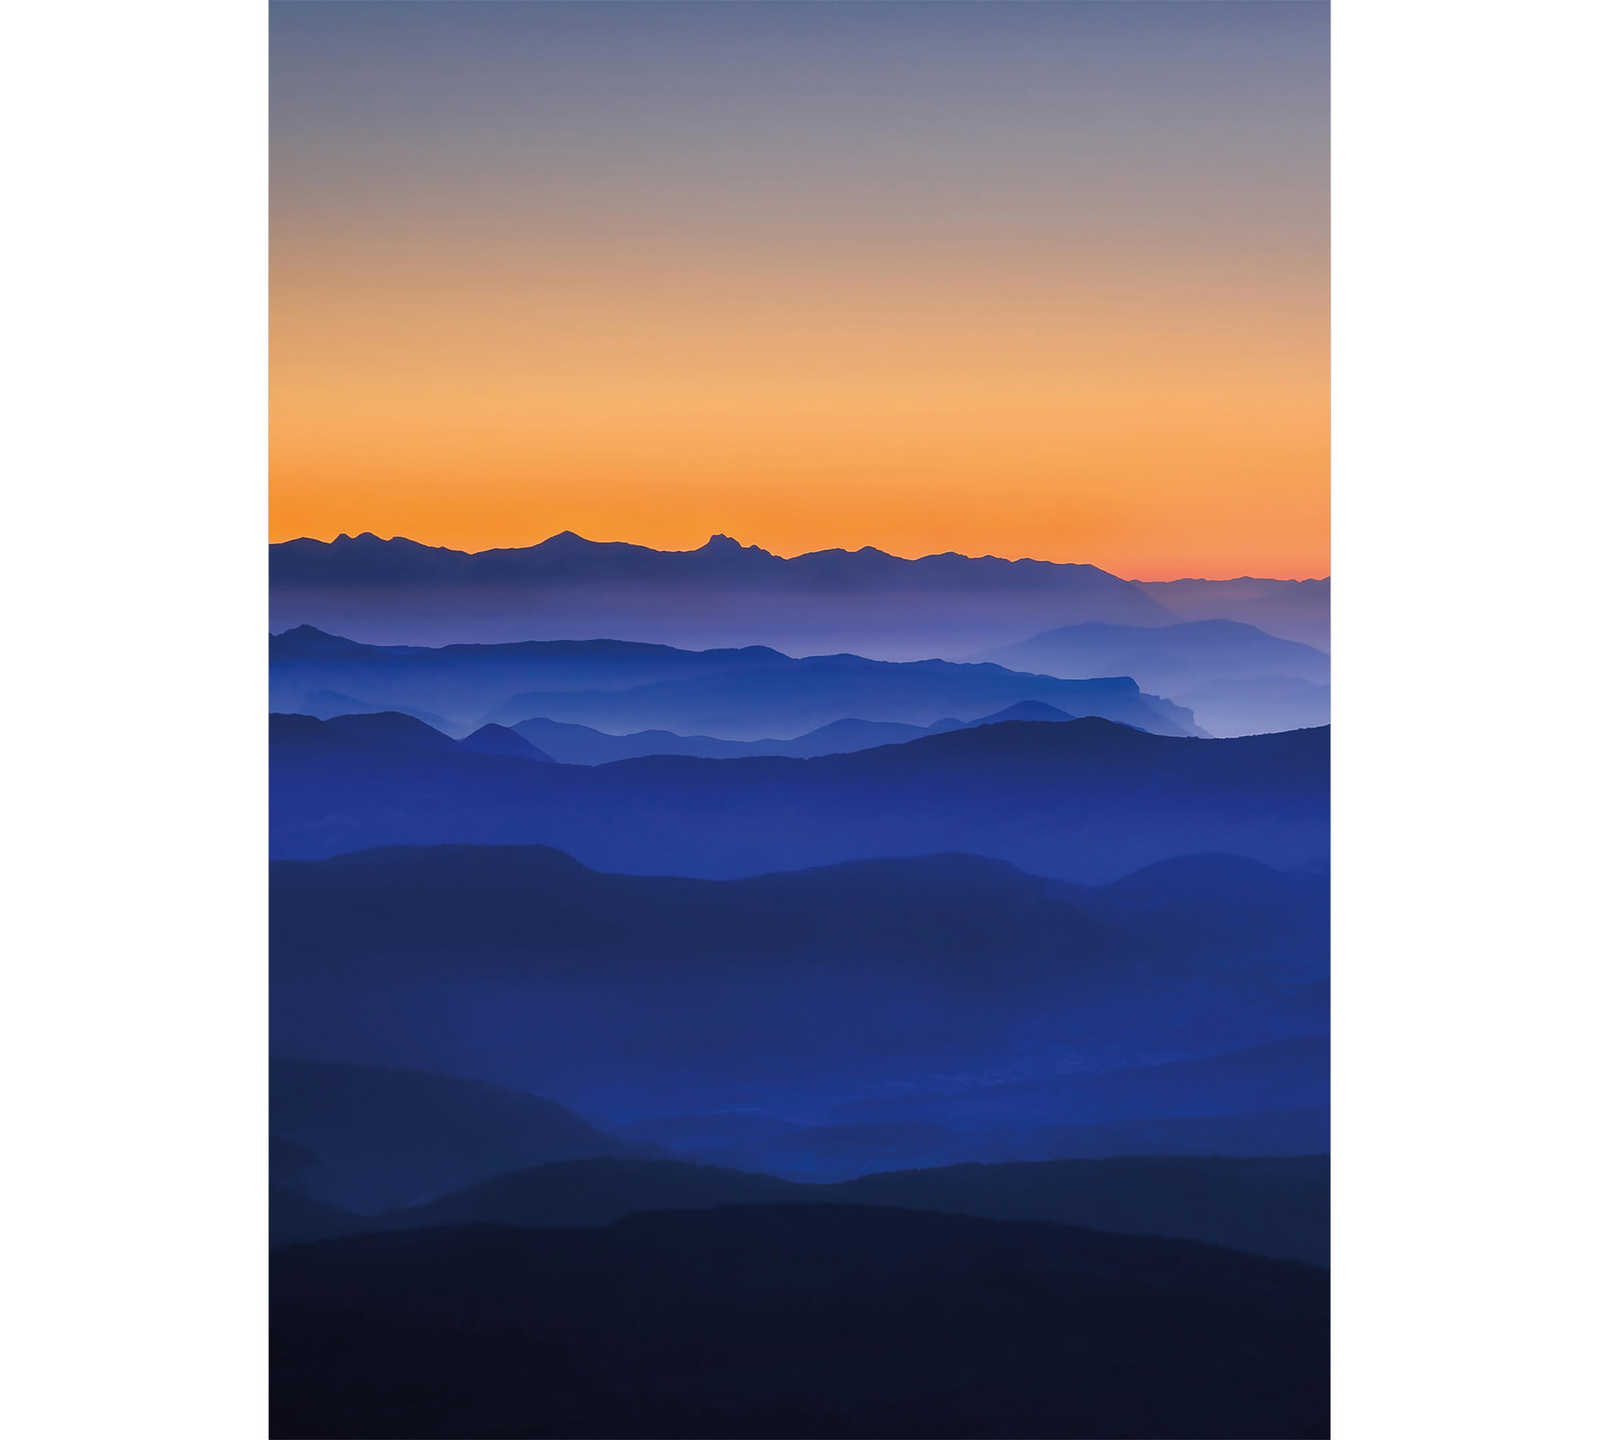 Photo wallpaper mountains at dusk - blue, orange, yellow
